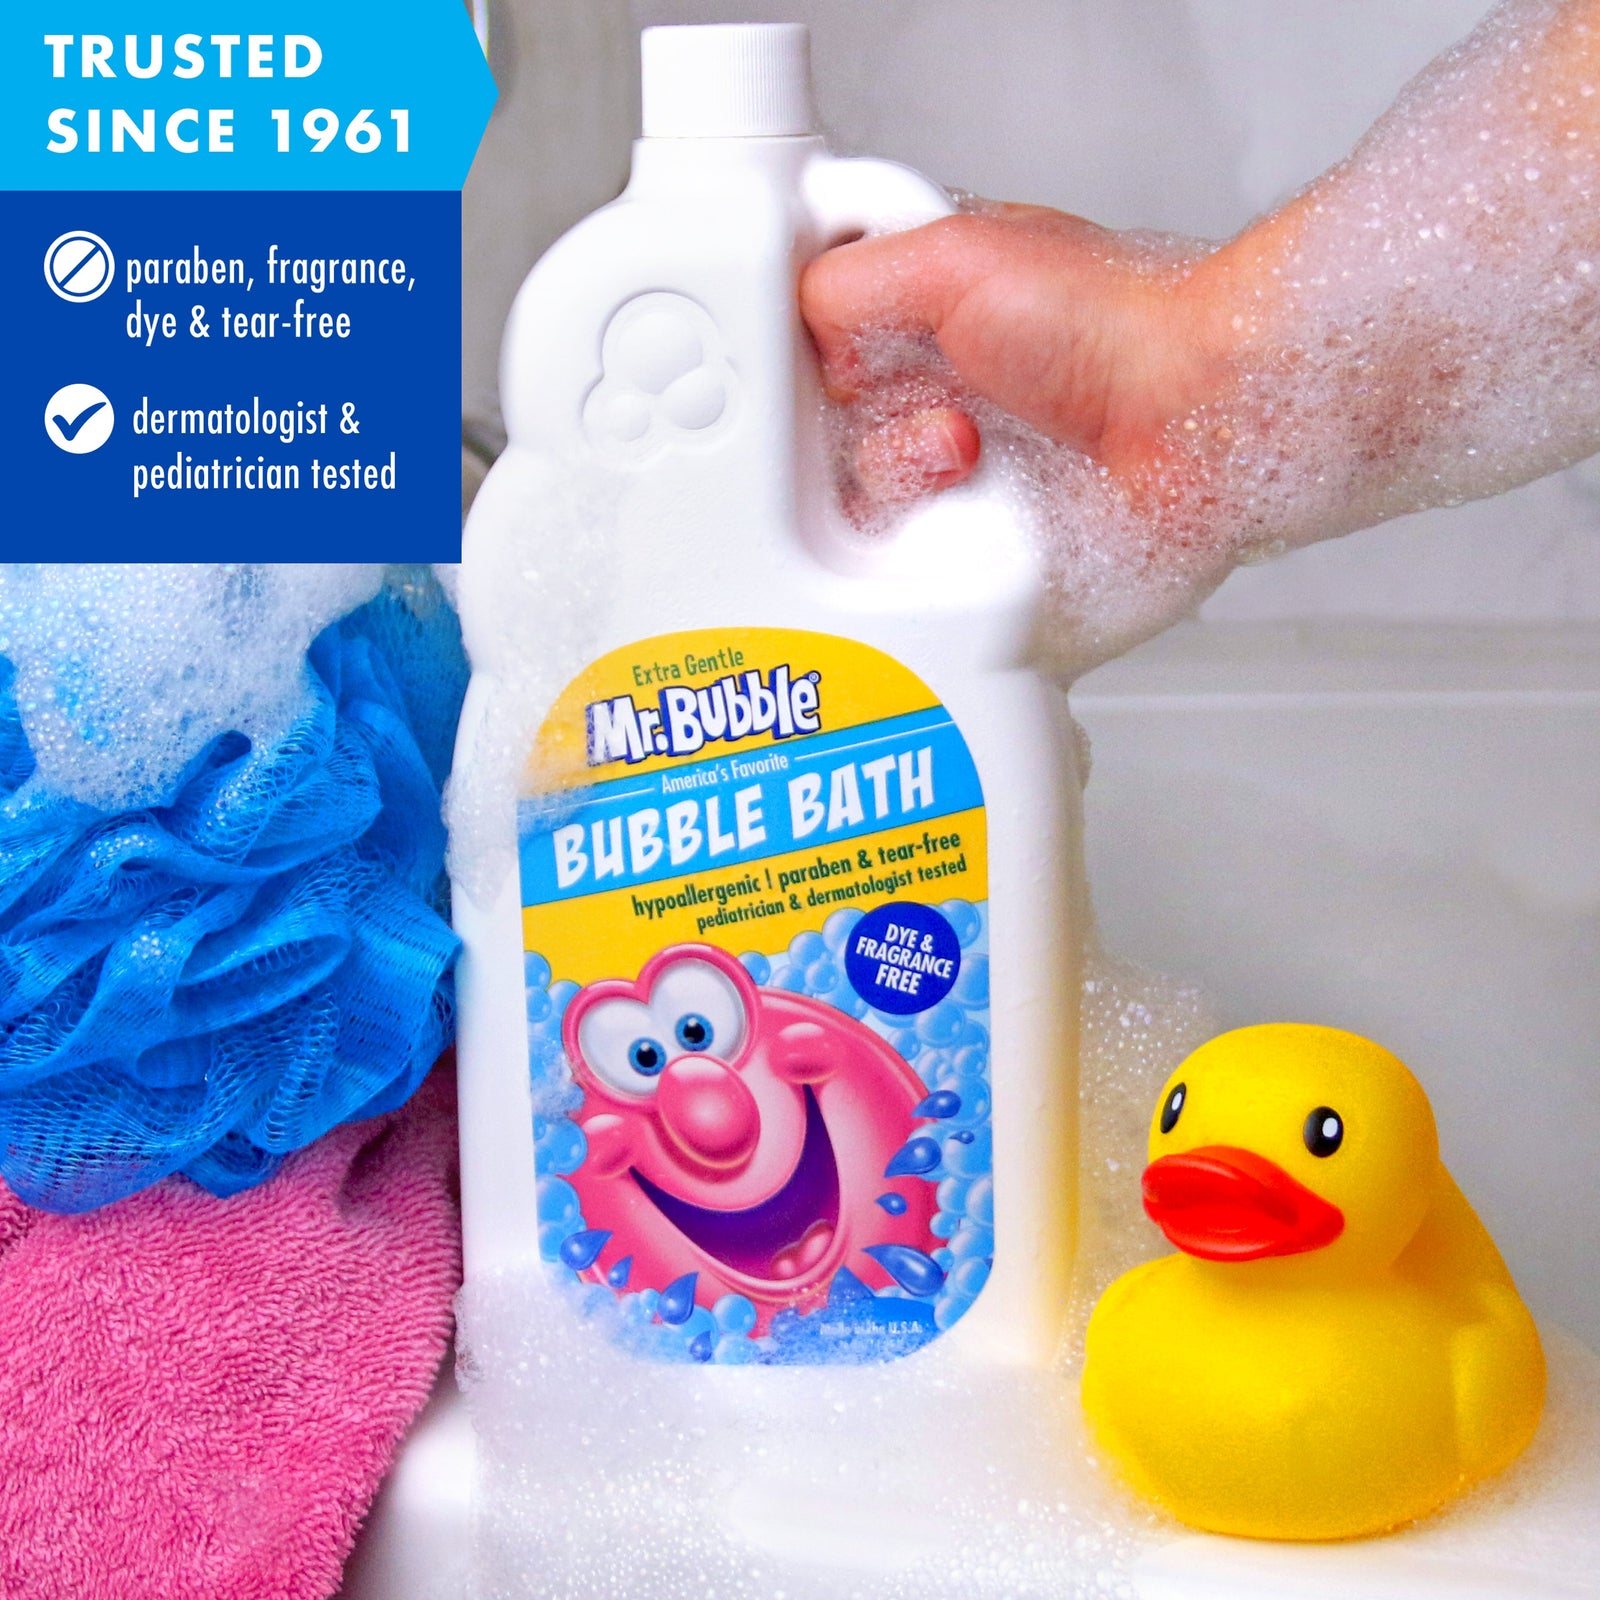 Extra Gentle Bubble Bath